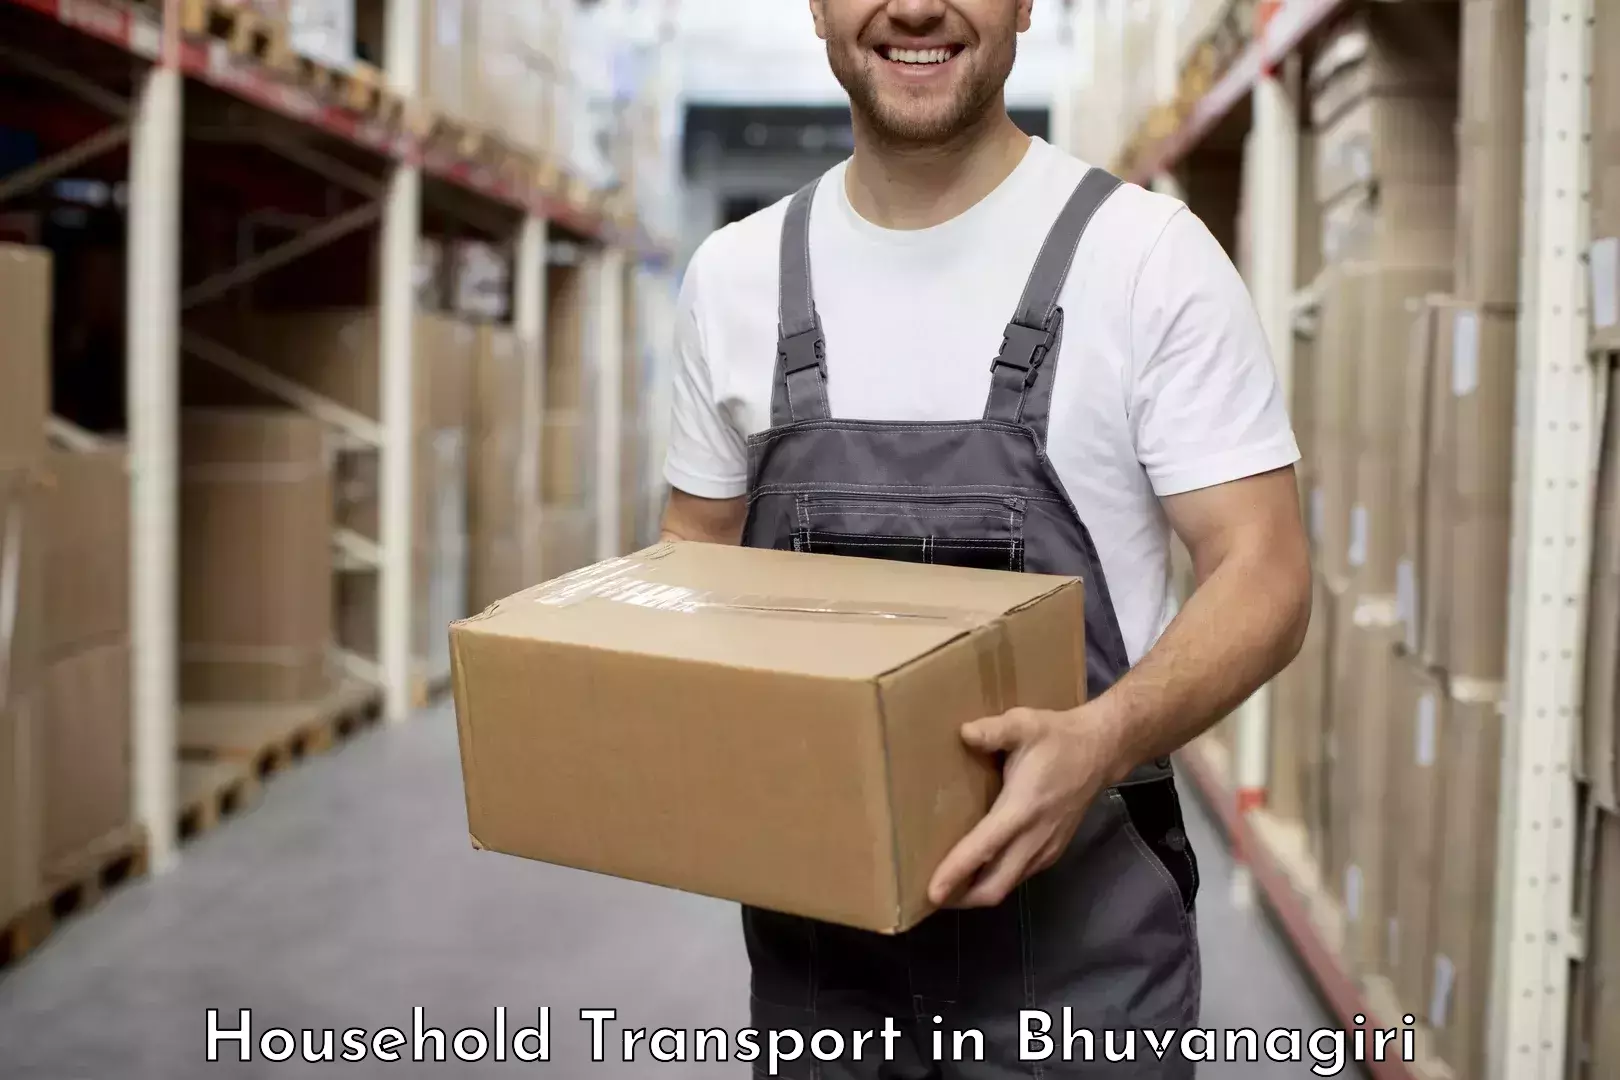 Quality household transport in Bhuvanagiri